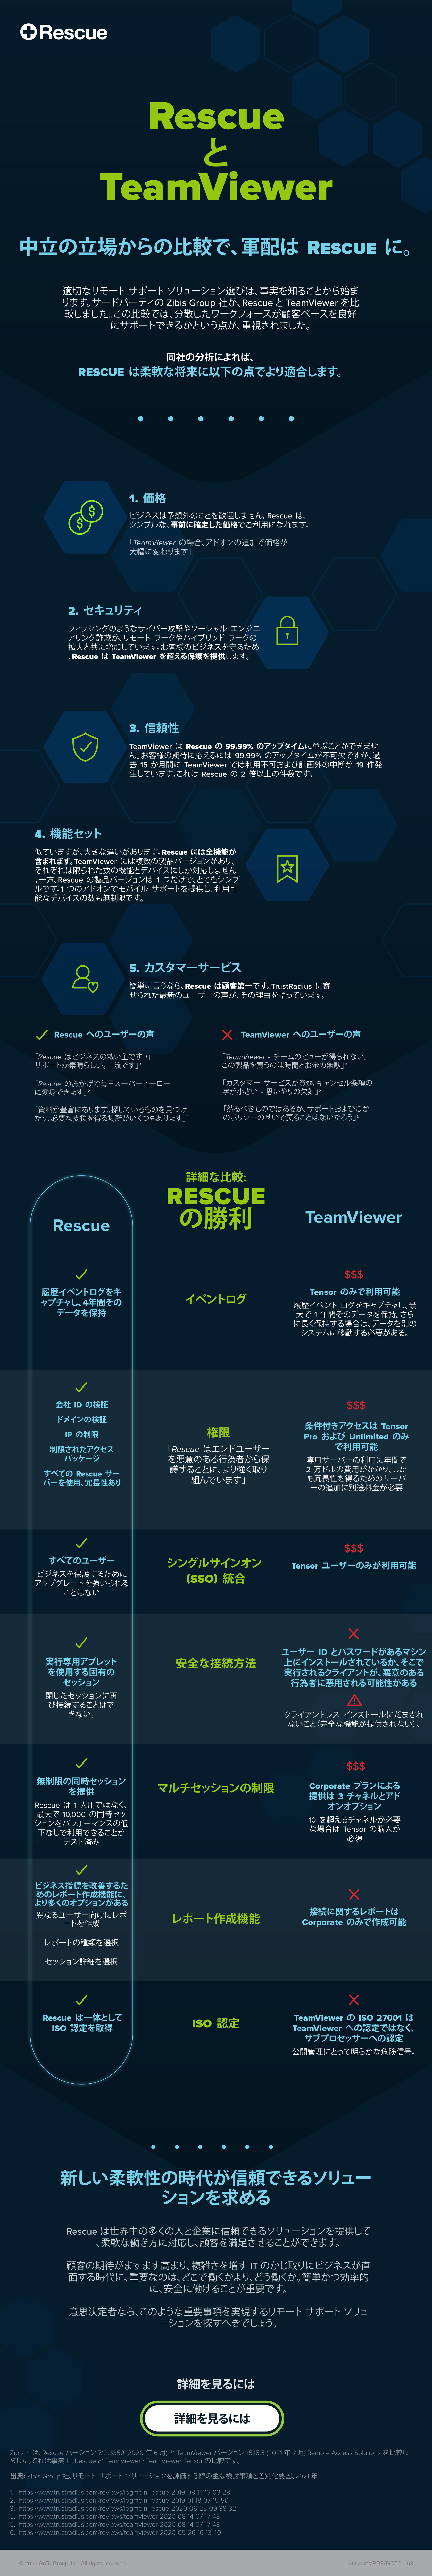 LogMeIn Rescue vs TeamViewer JA